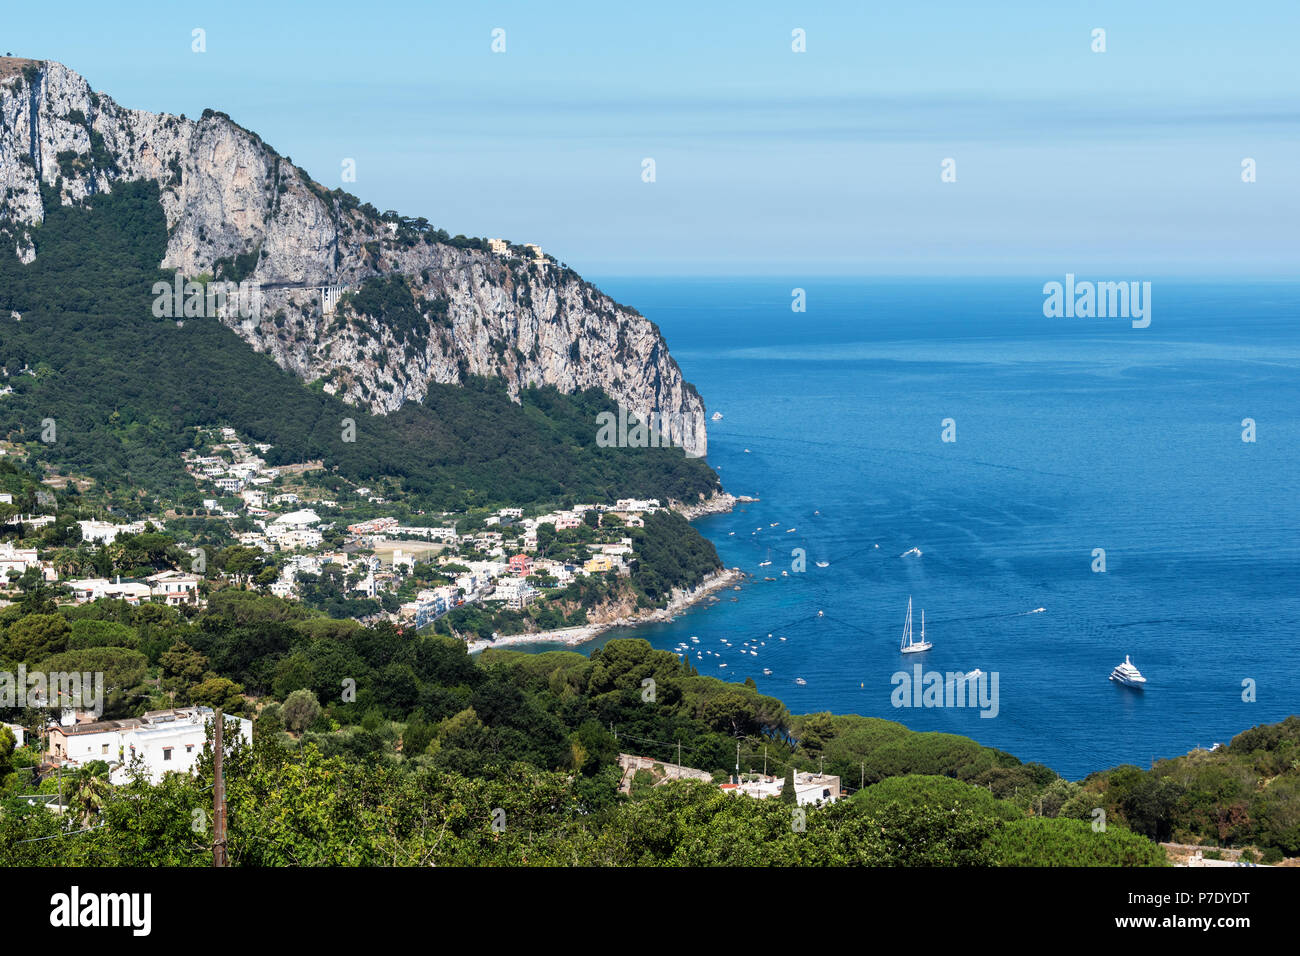 Die Insel Capri, Tyrrhenische Meer, den Golf von Neapel, Kampanien, Italien. Stockfoto